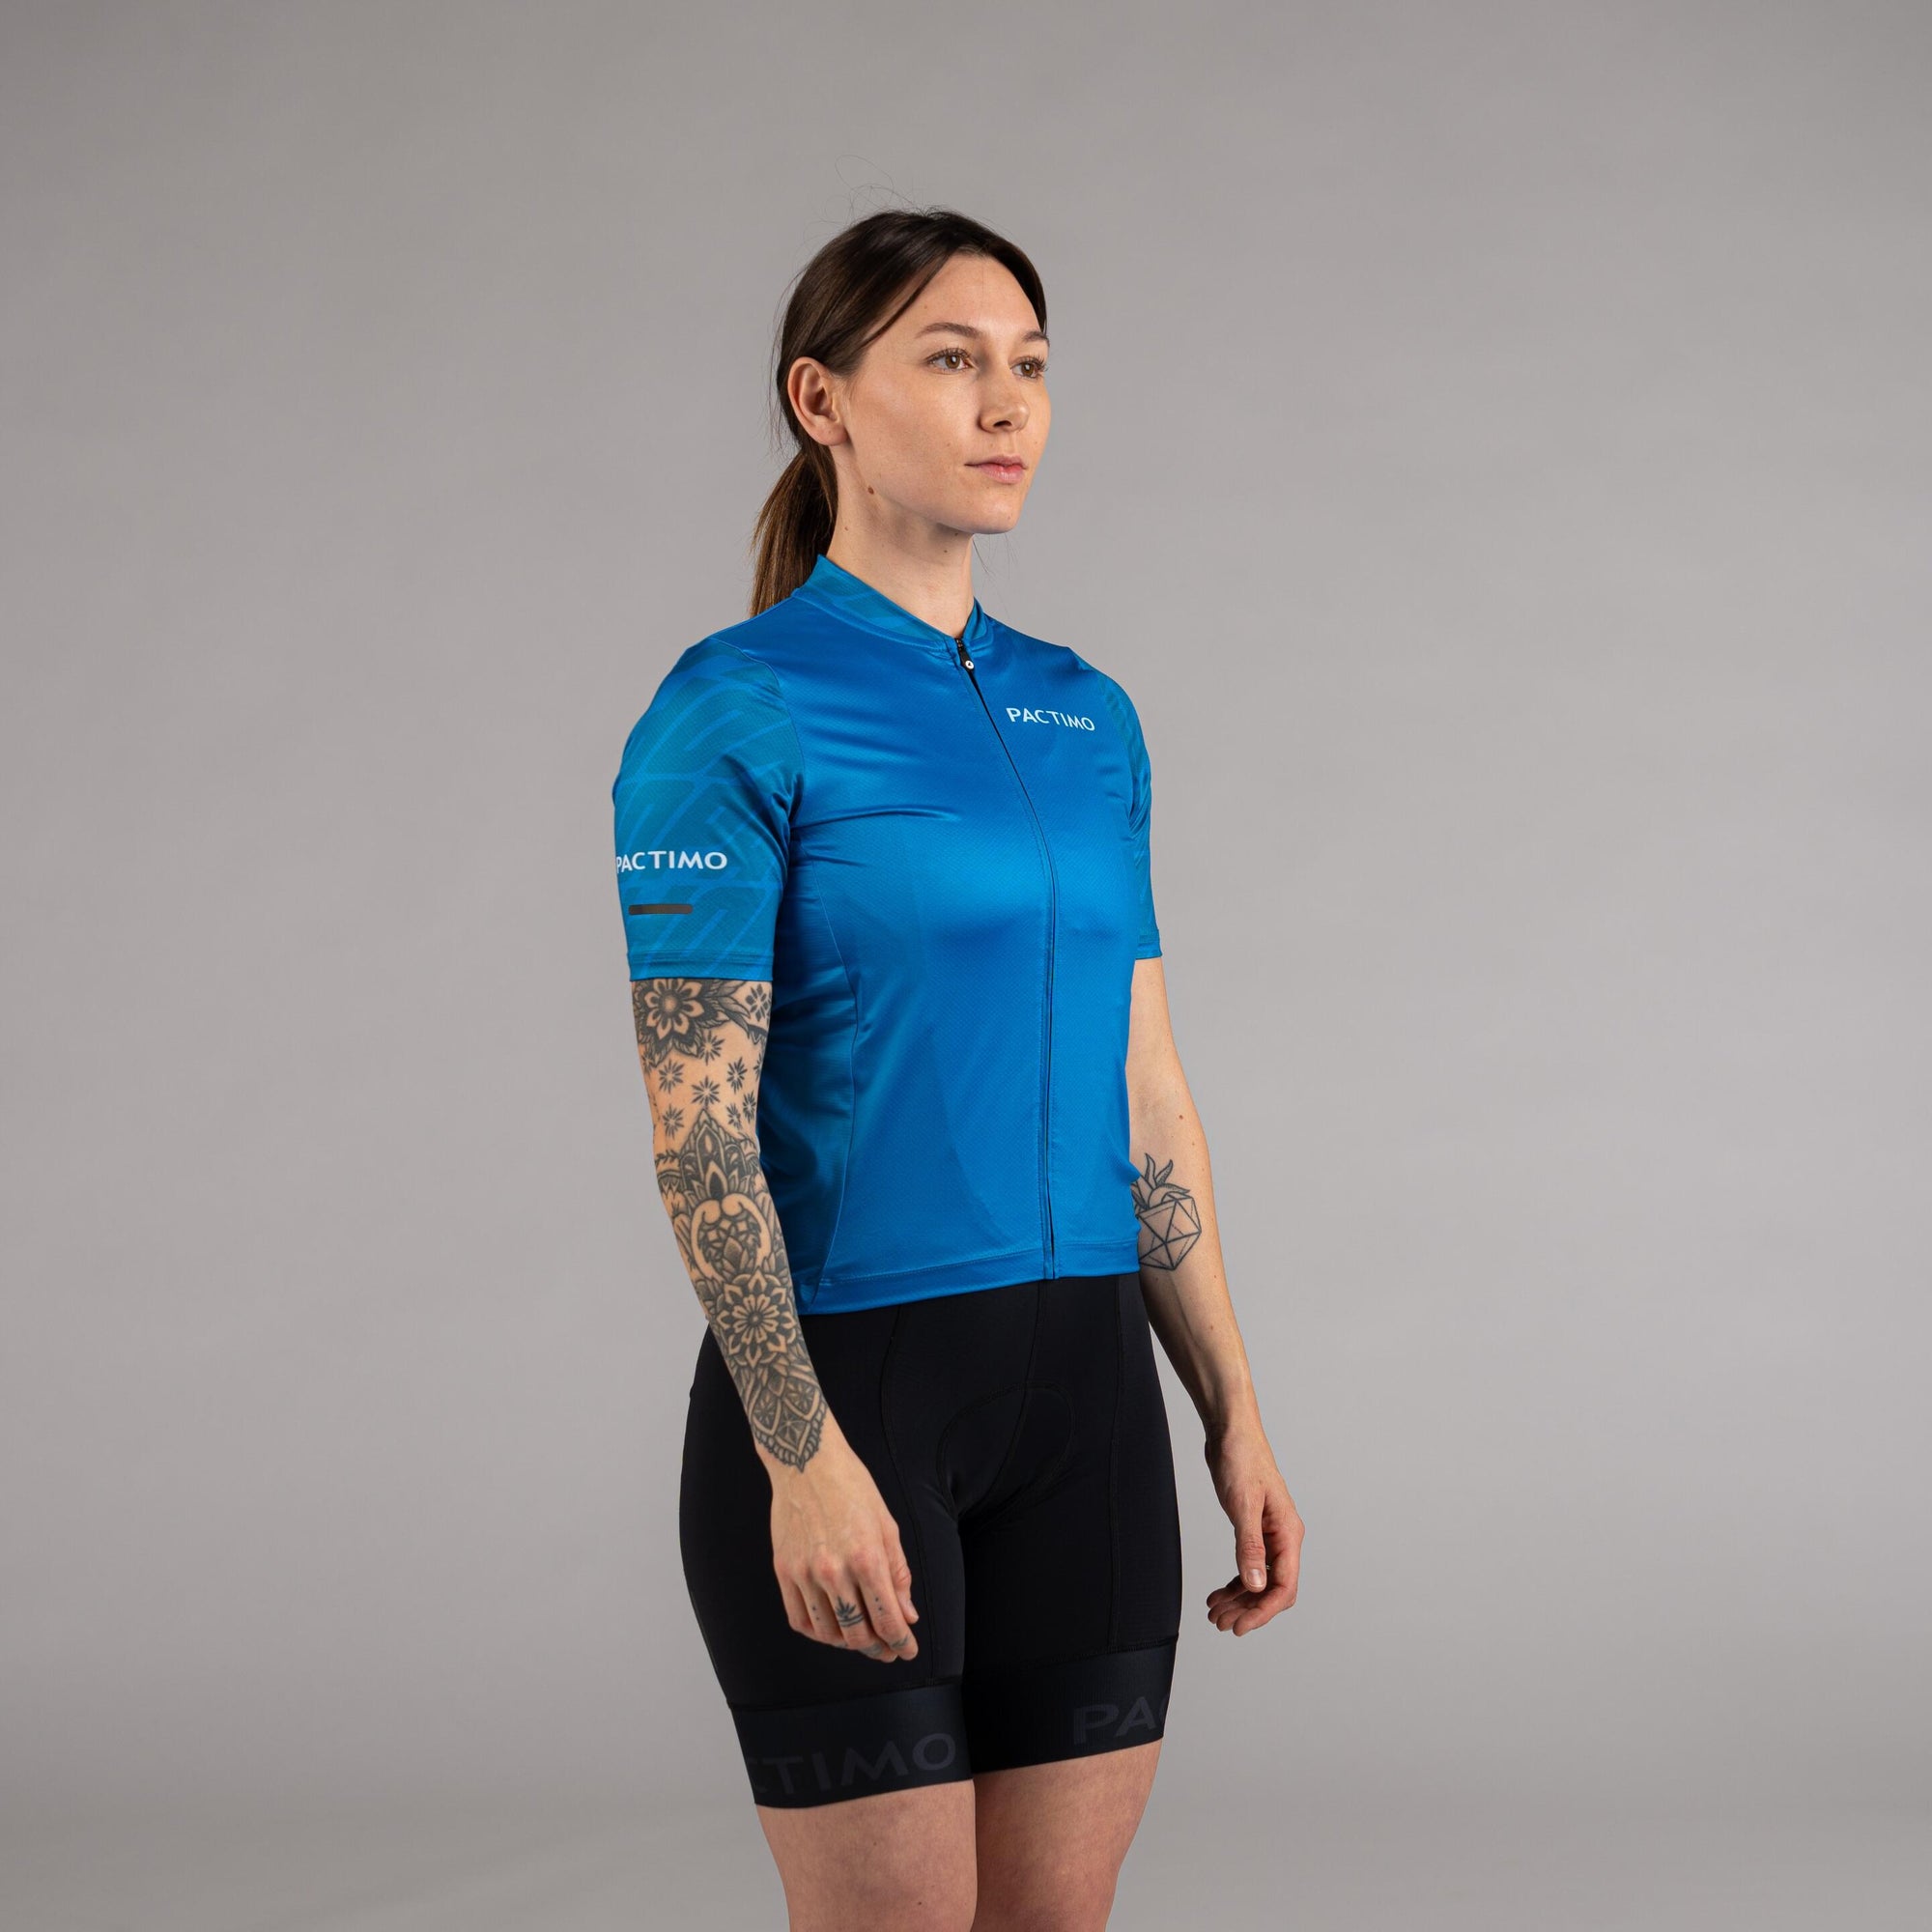 Women's Ascent Cycling Jersey - Fit Comparison